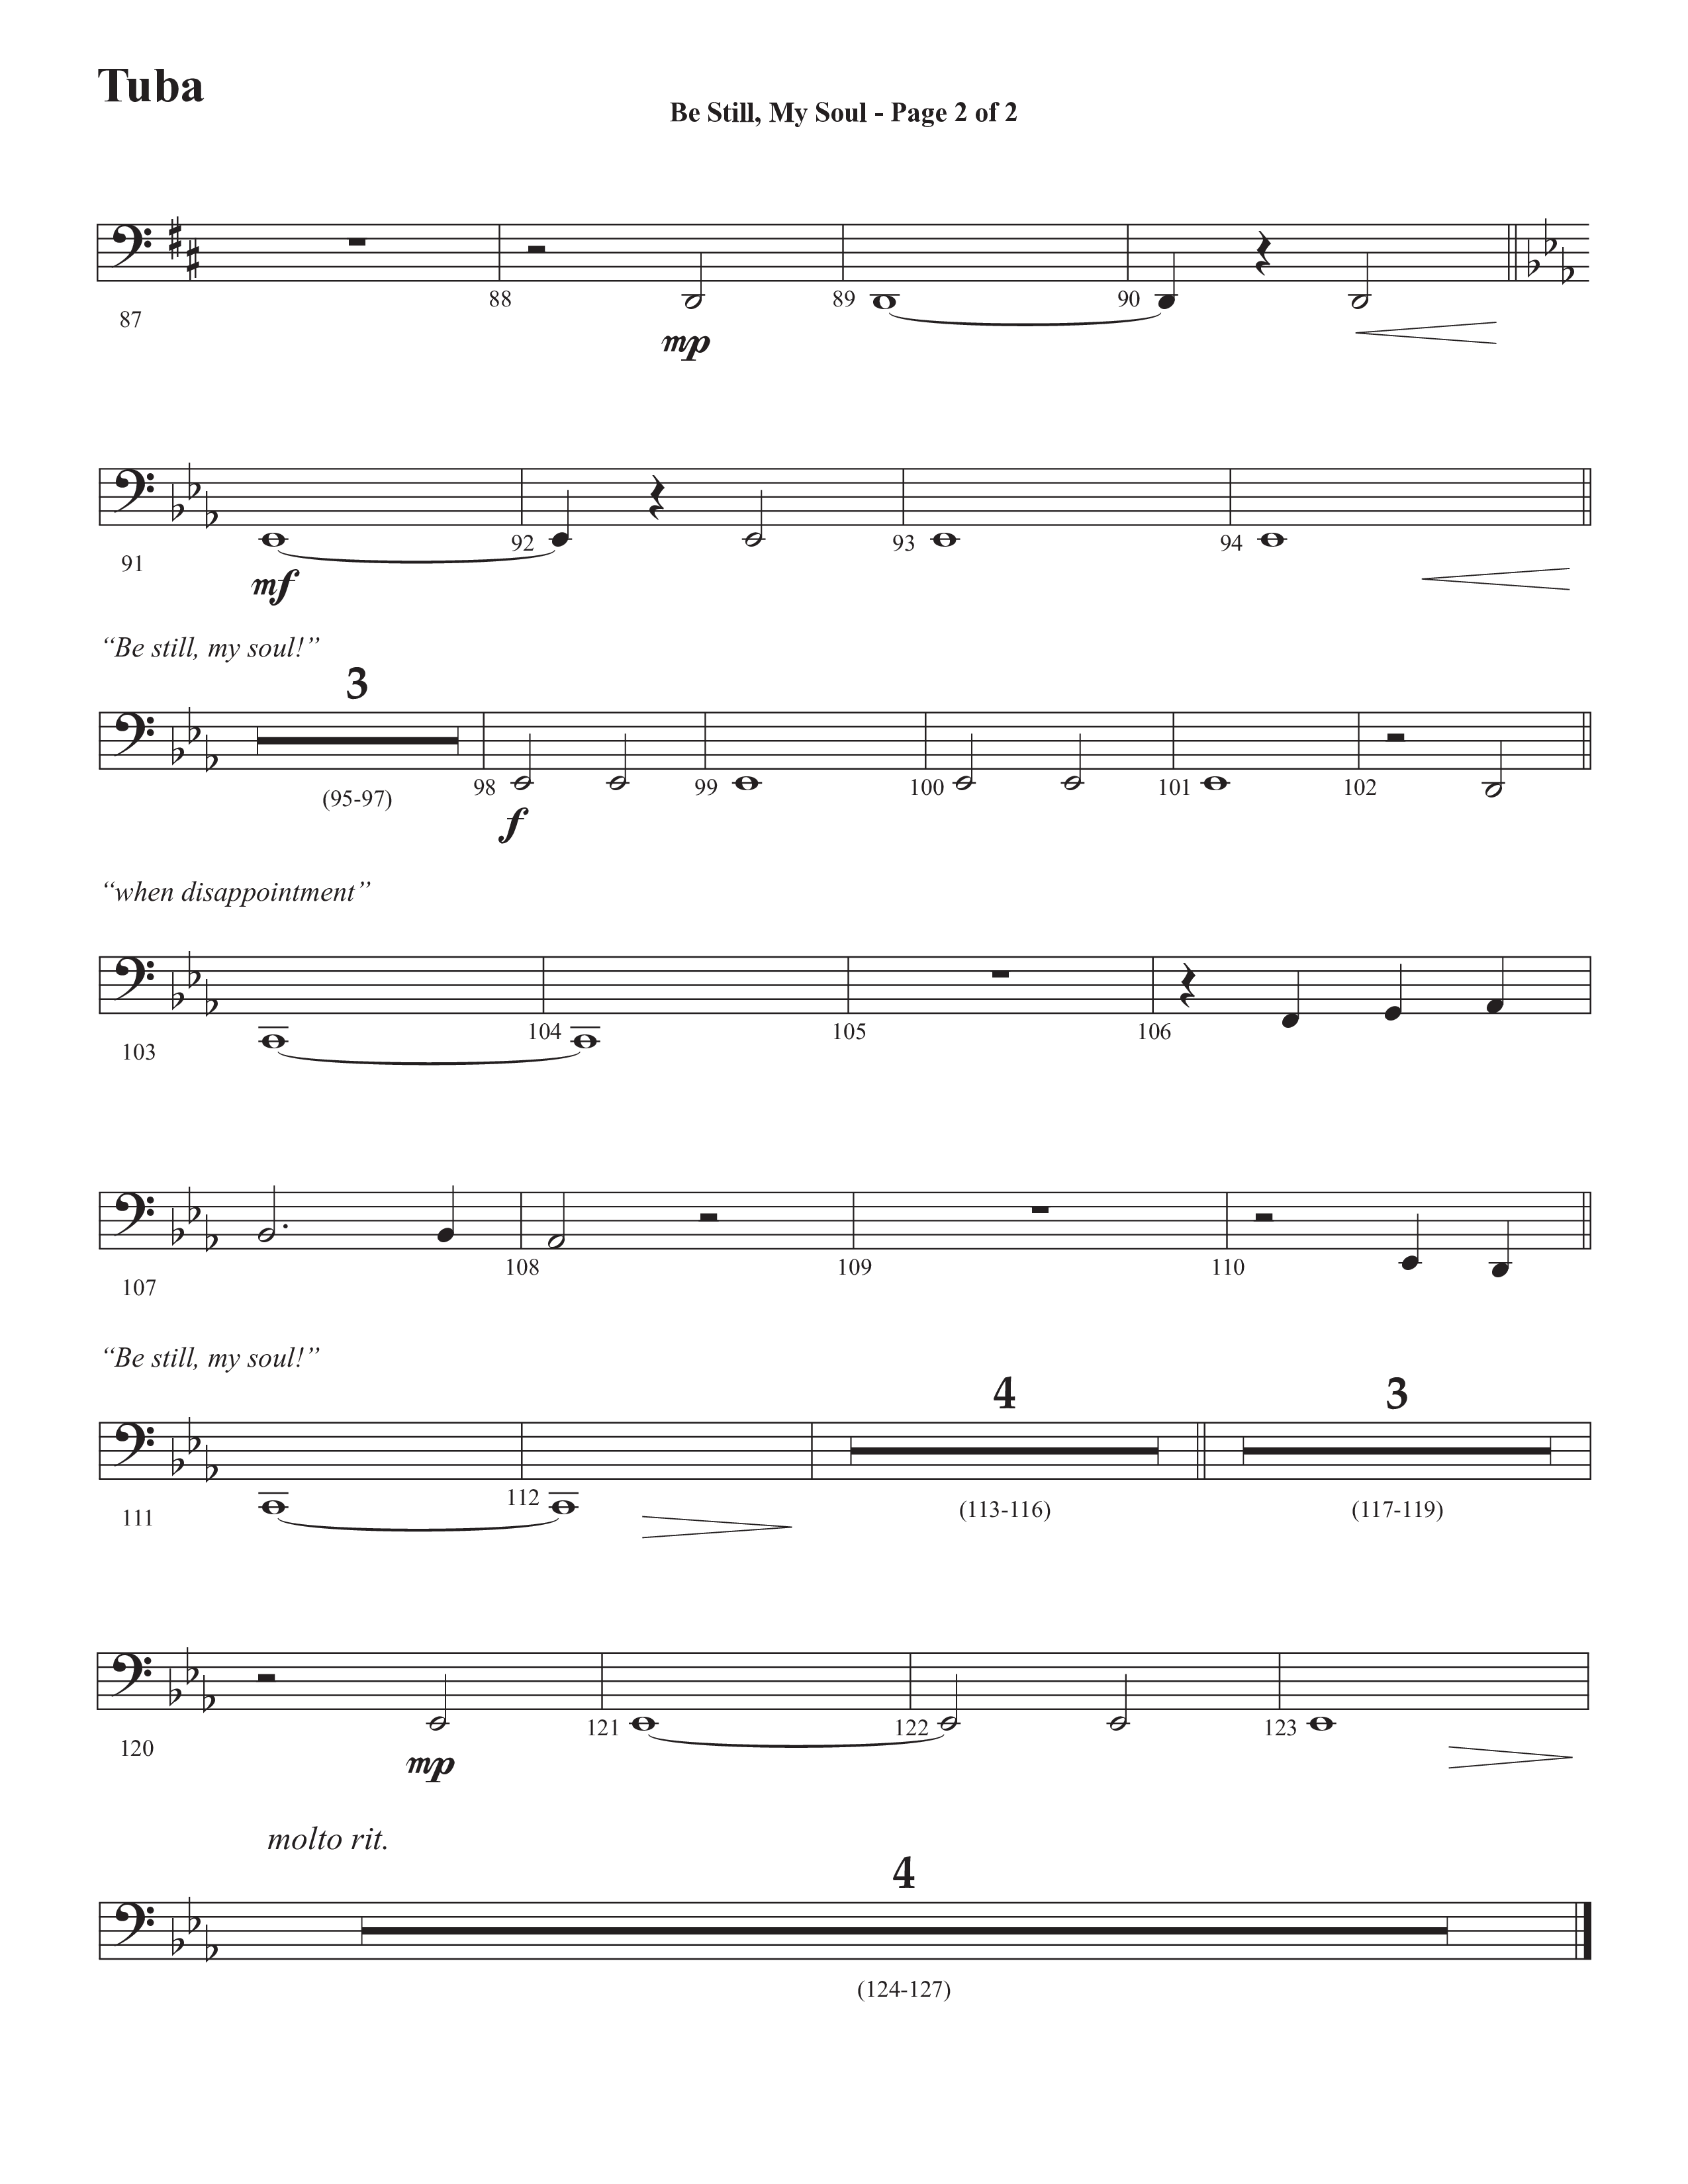 Be Still My Soul (Choral Anthem SATB) Tuba (Semsen Music / Arr. Cliff Duren)